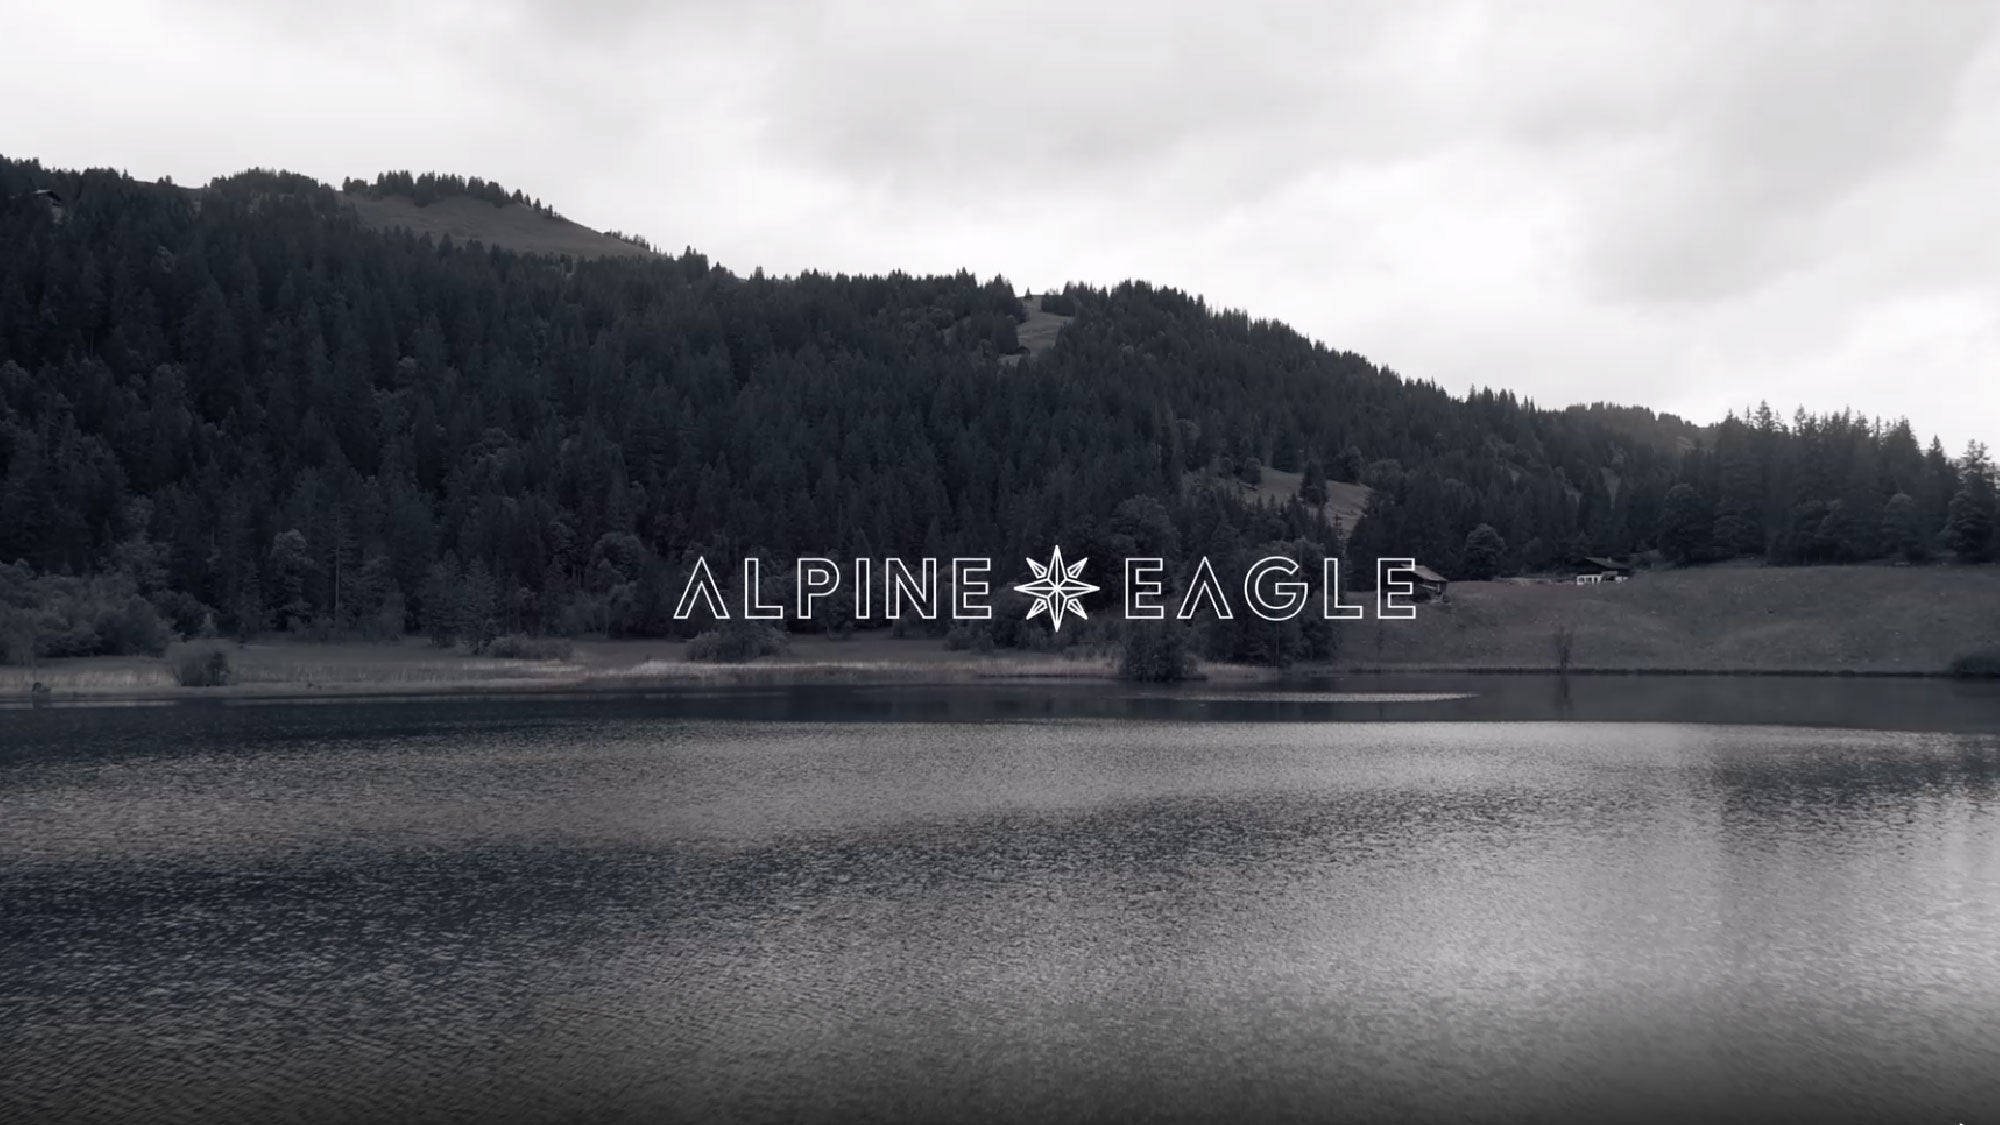 CHOPARD ALPINE EAGLE GSTAAD EDITION - Opulence